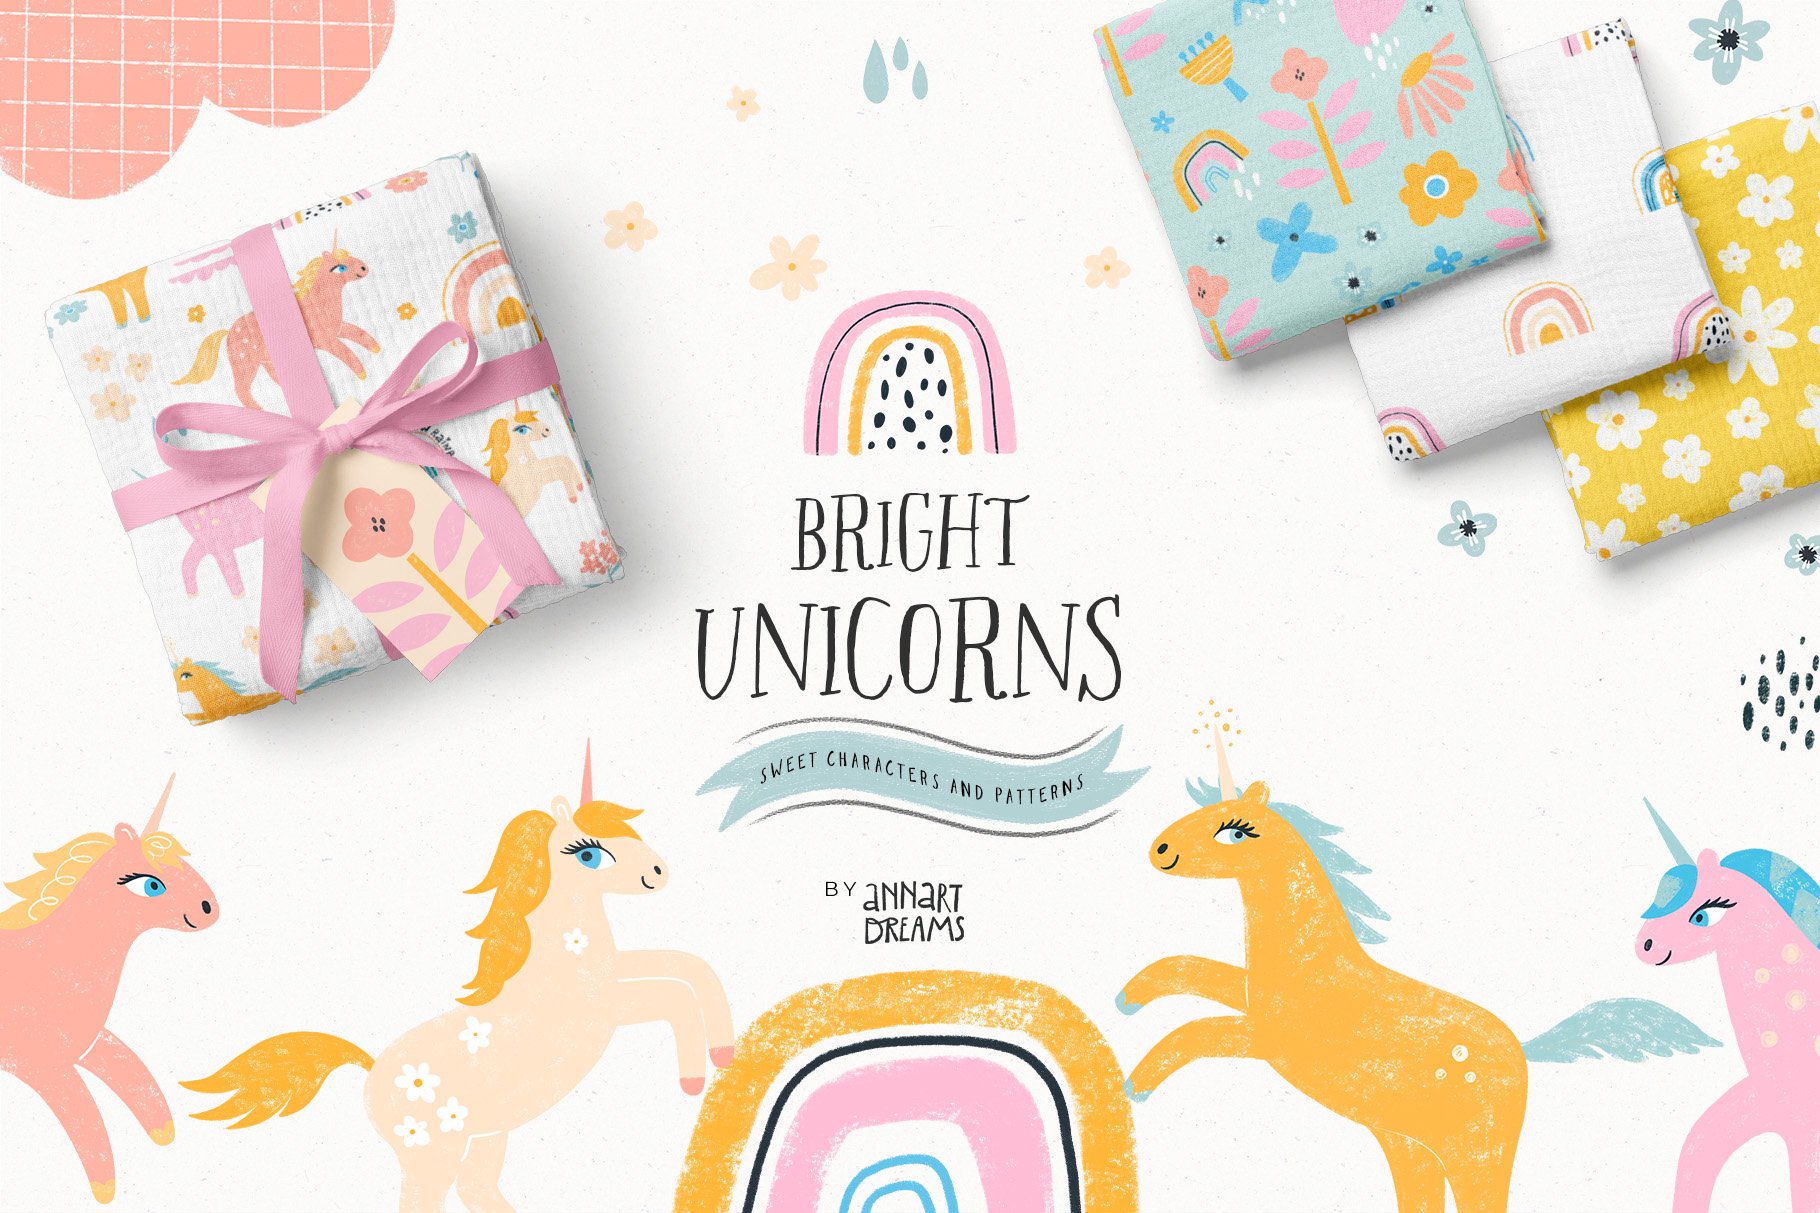 Bright Unicorns, Rainbows & Flowers cover image.